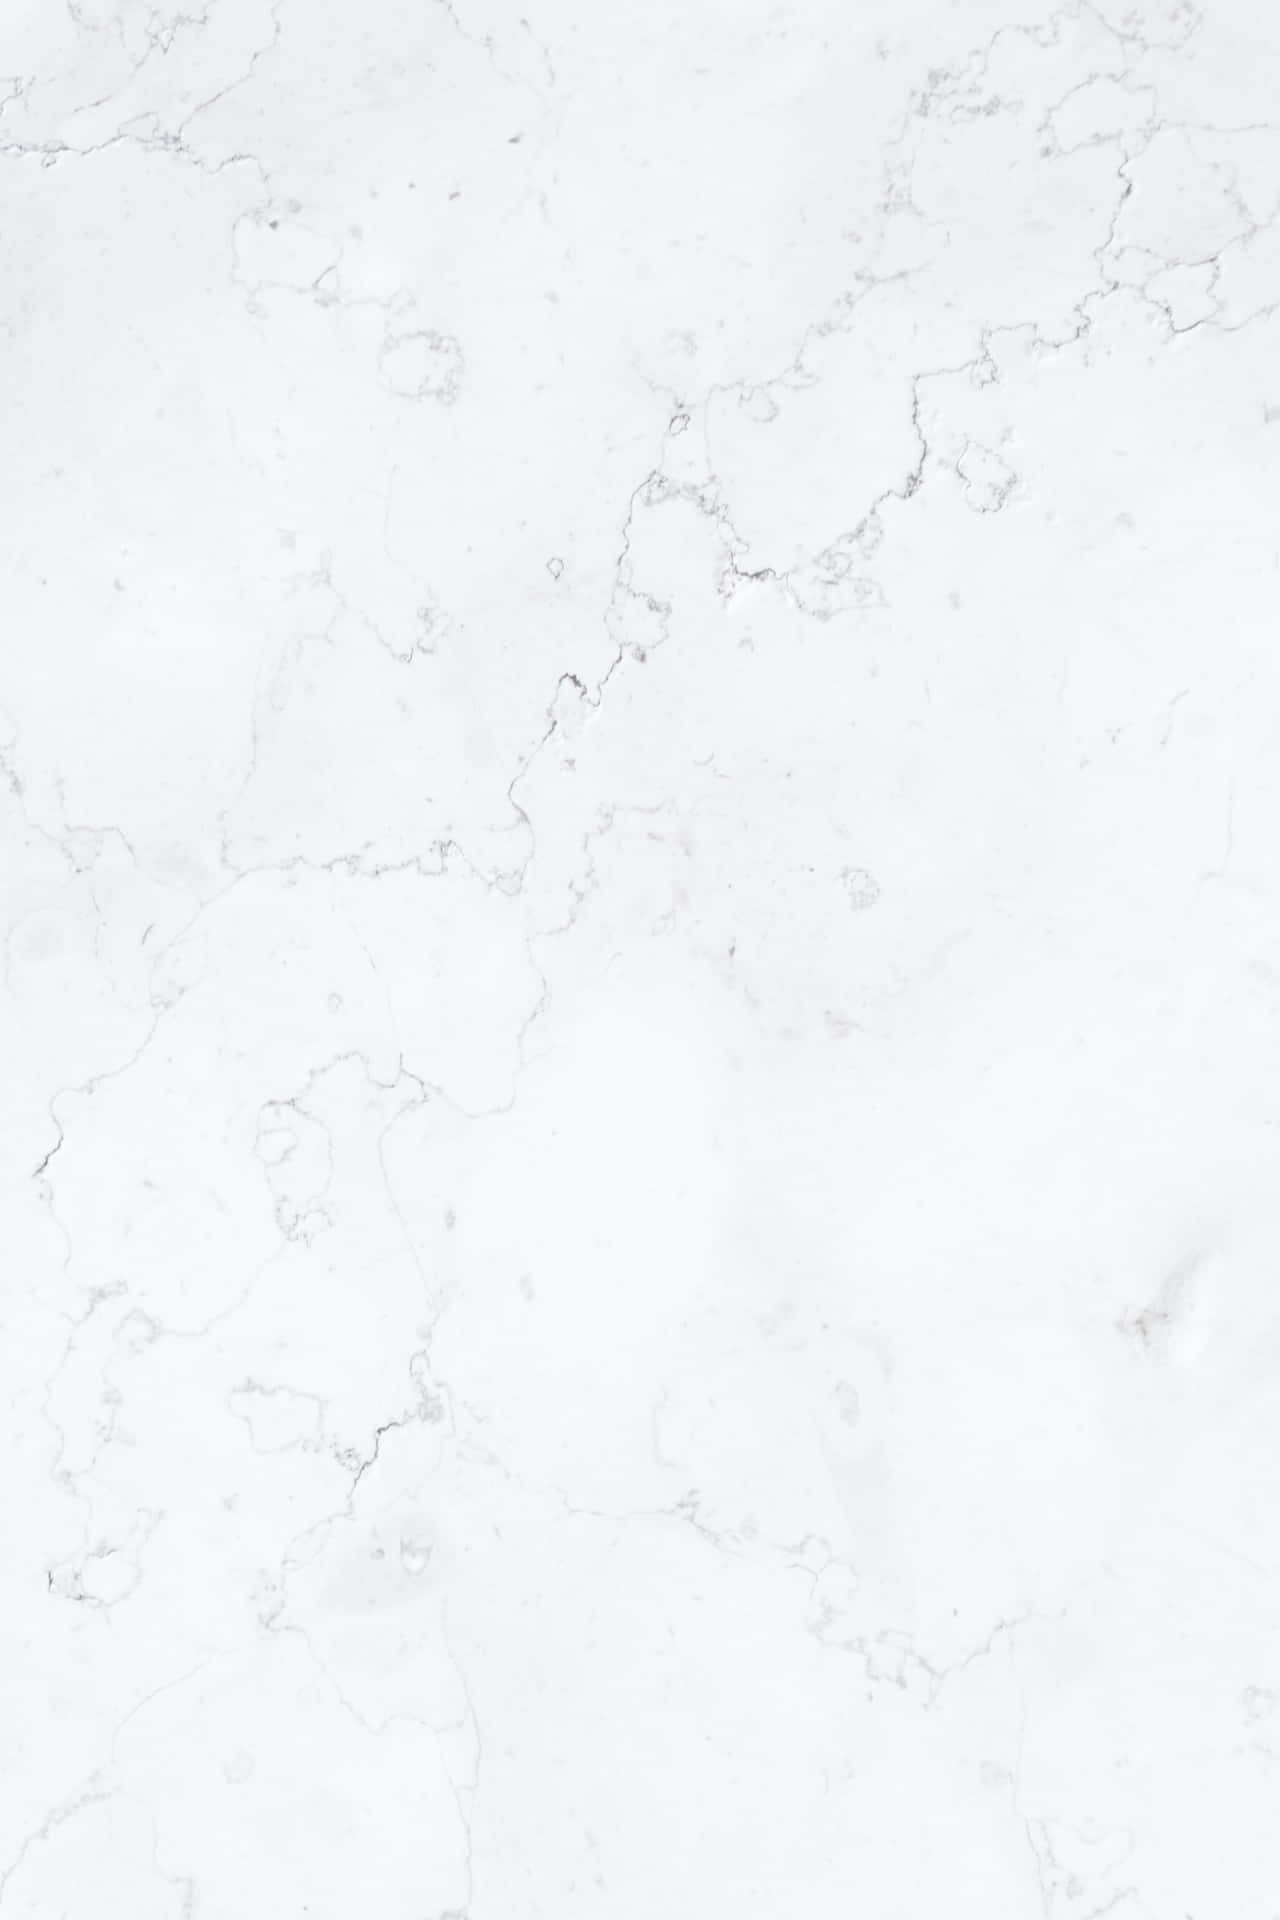 Caption: Elegant White Marble Texture